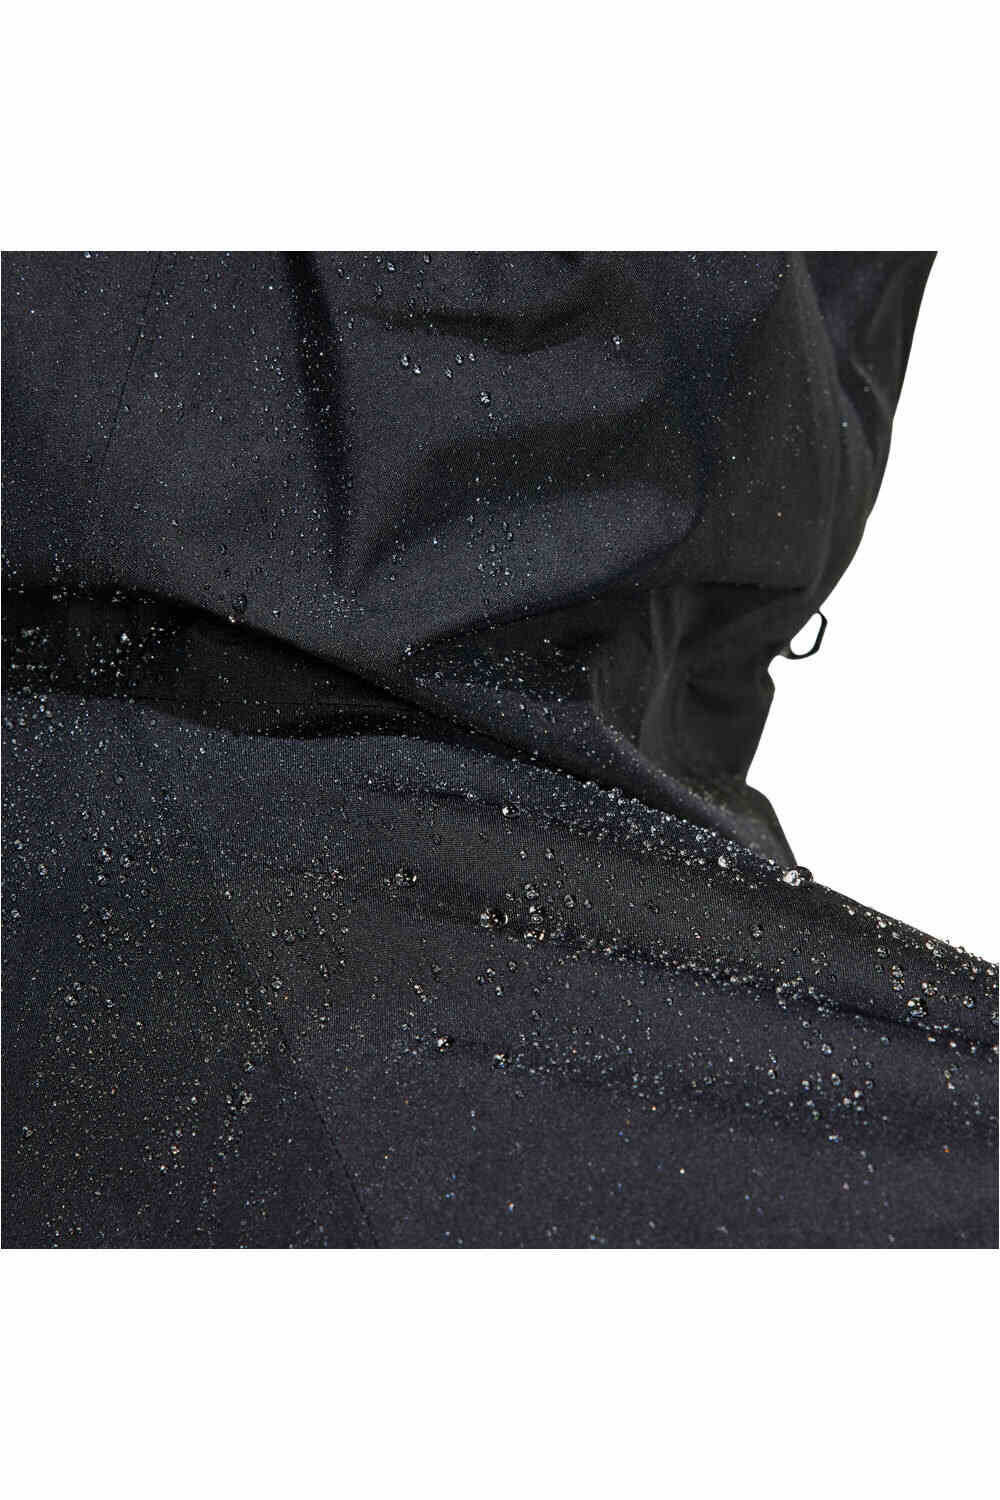 adidas chaqueta impermeable hombre Terrex Xperior GORE-TEX Paclite Rain 03